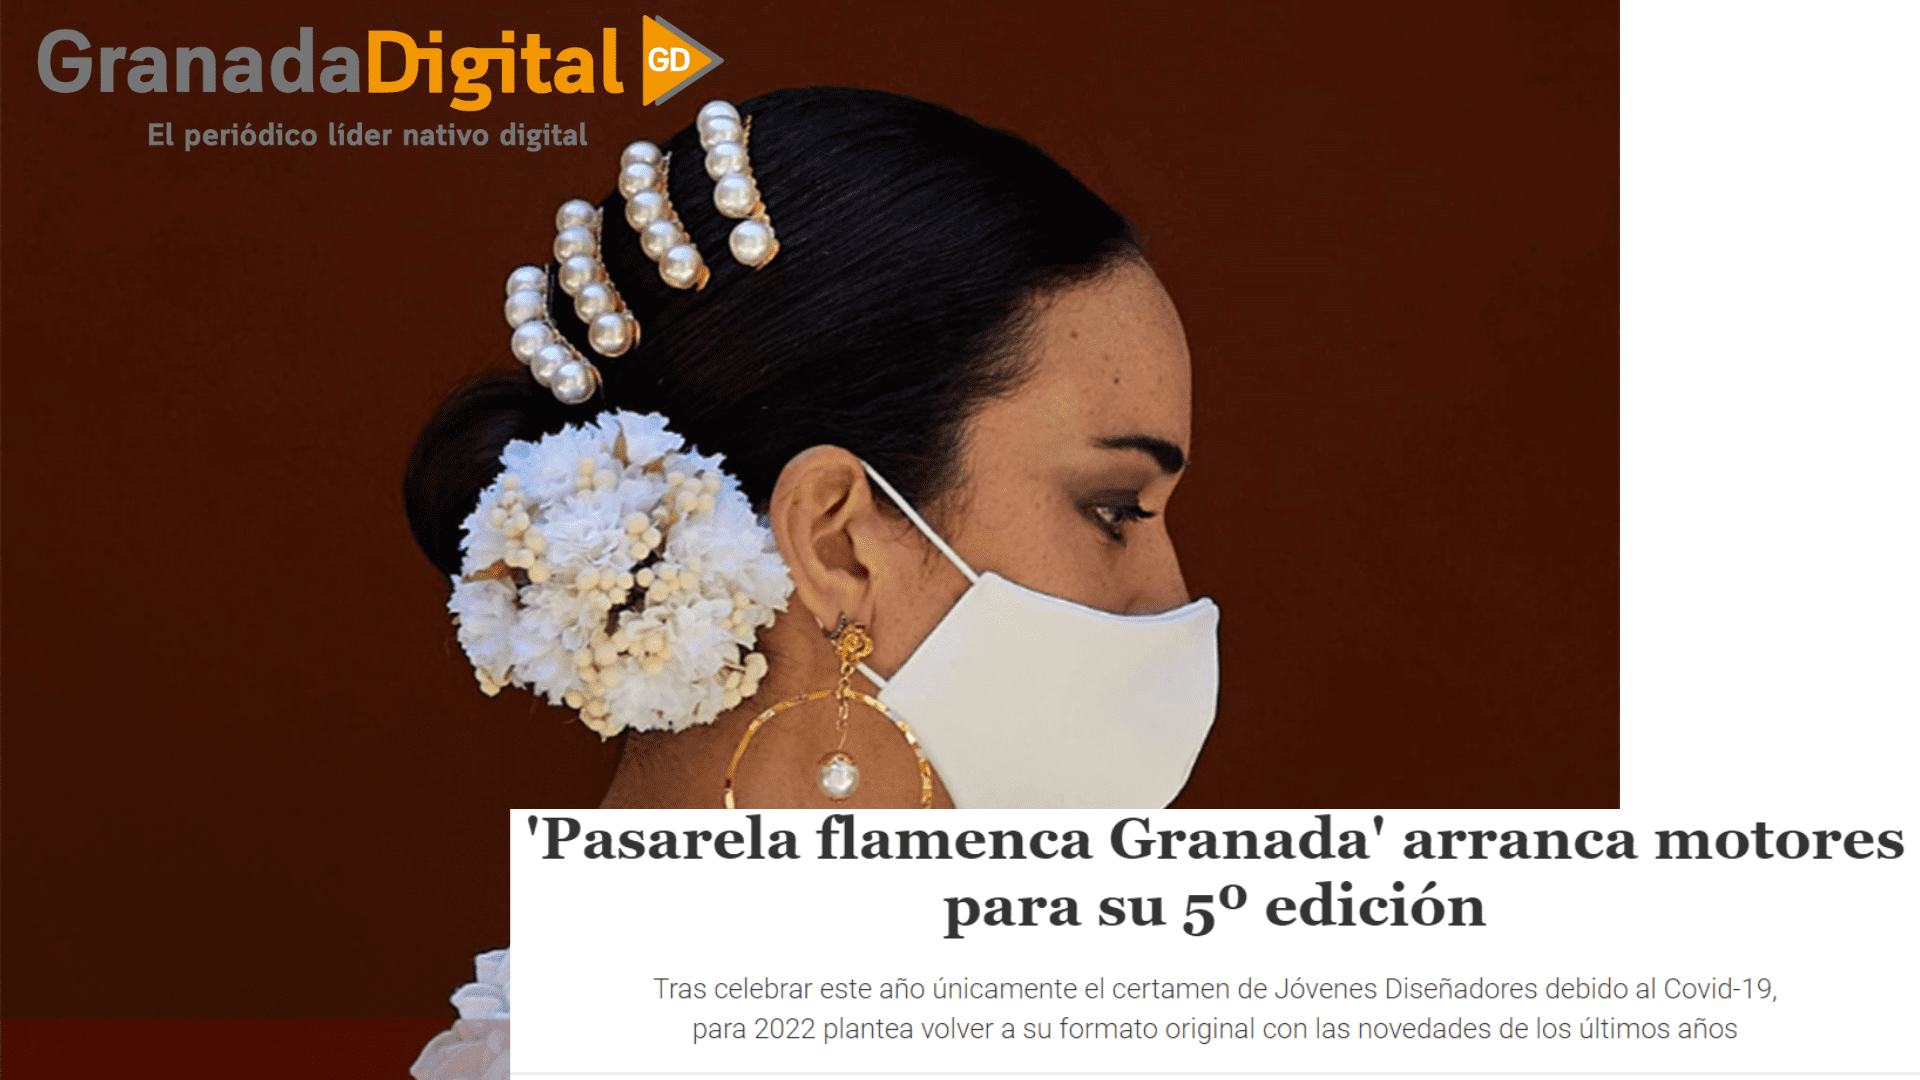 Pasarela Flamenca Granada en Granada Digital